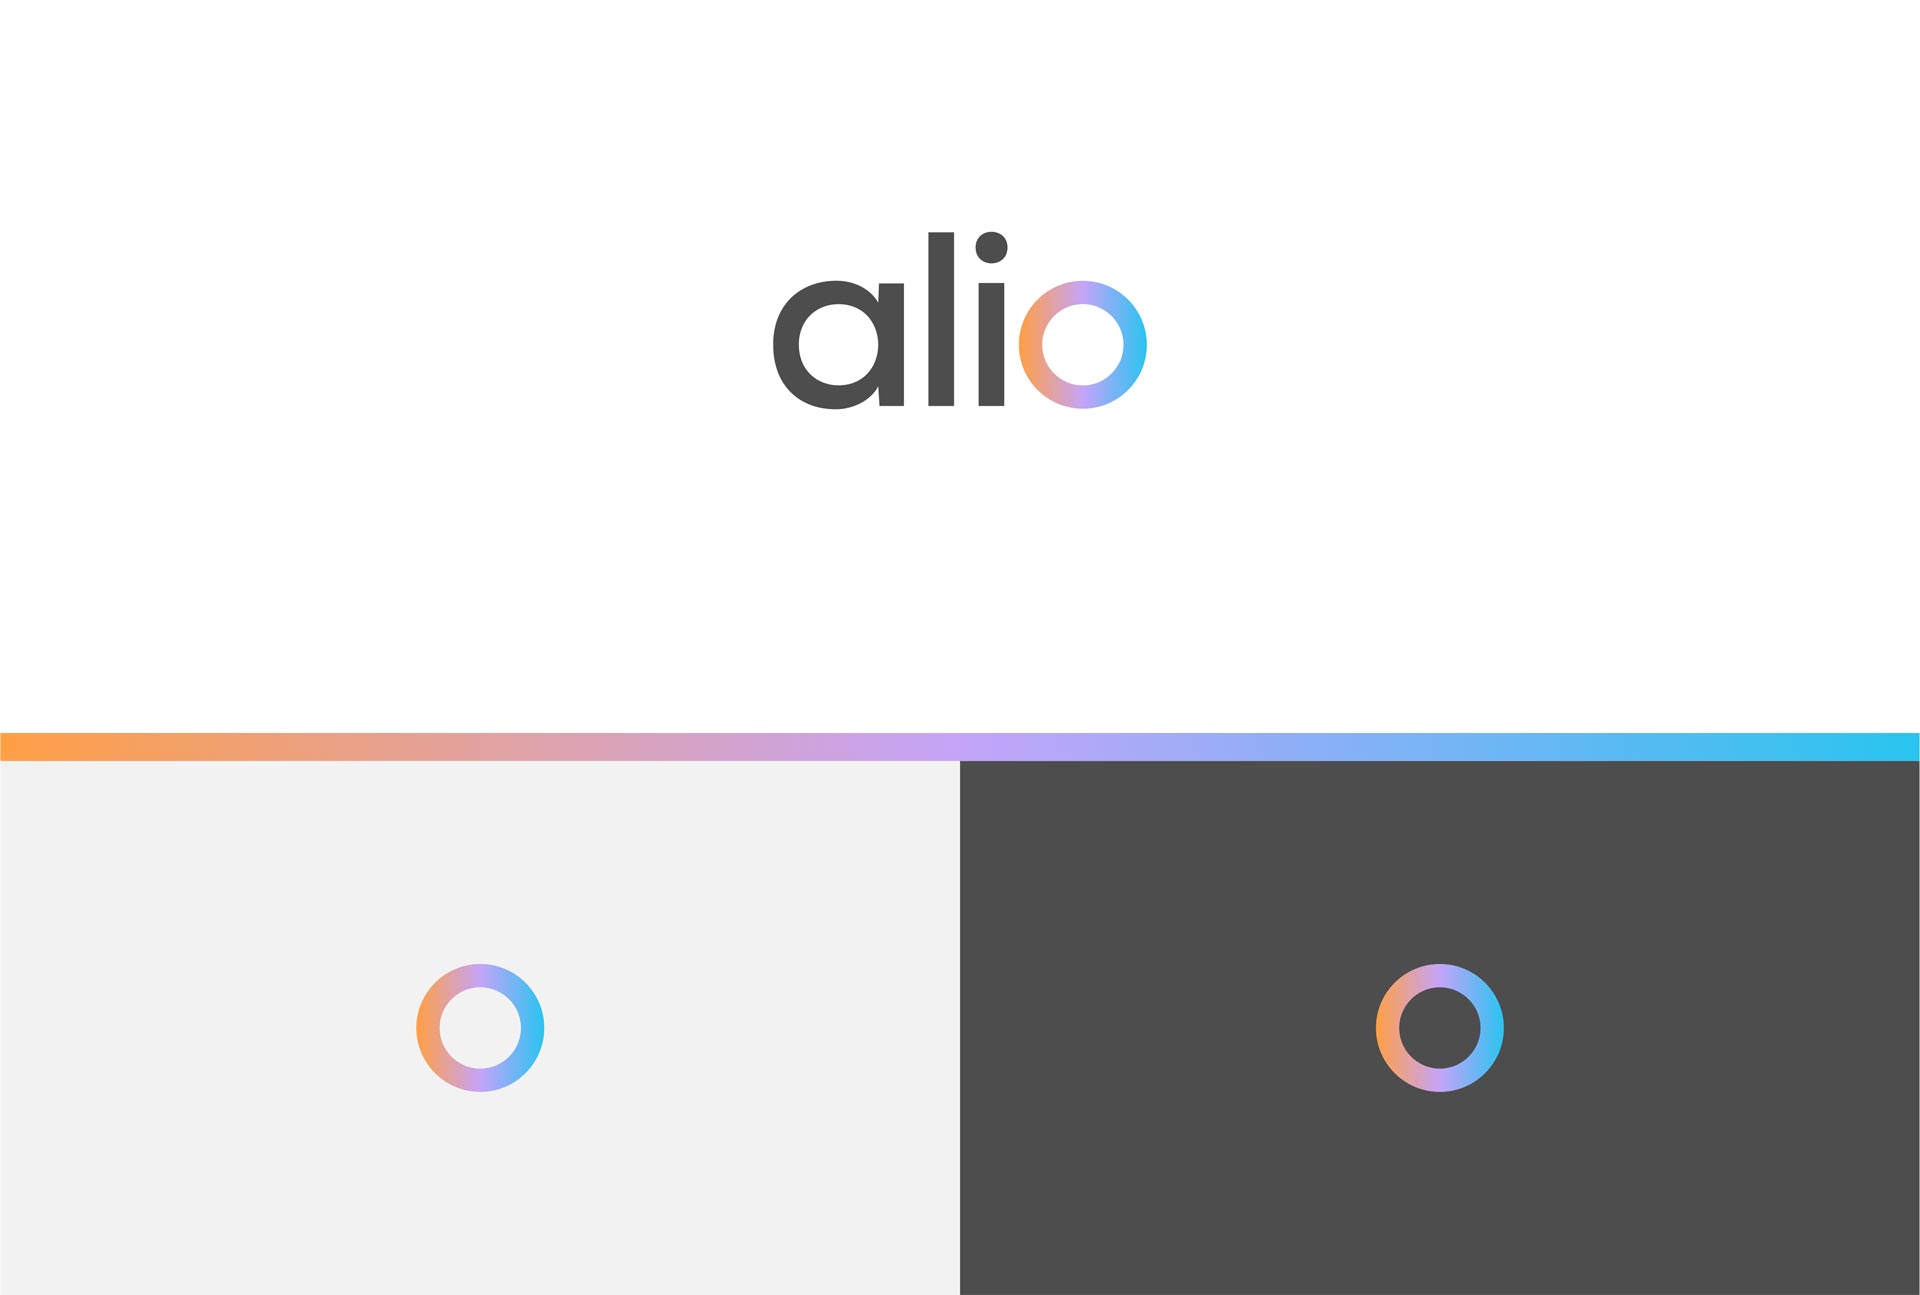 aliologos-01-small_Optimized